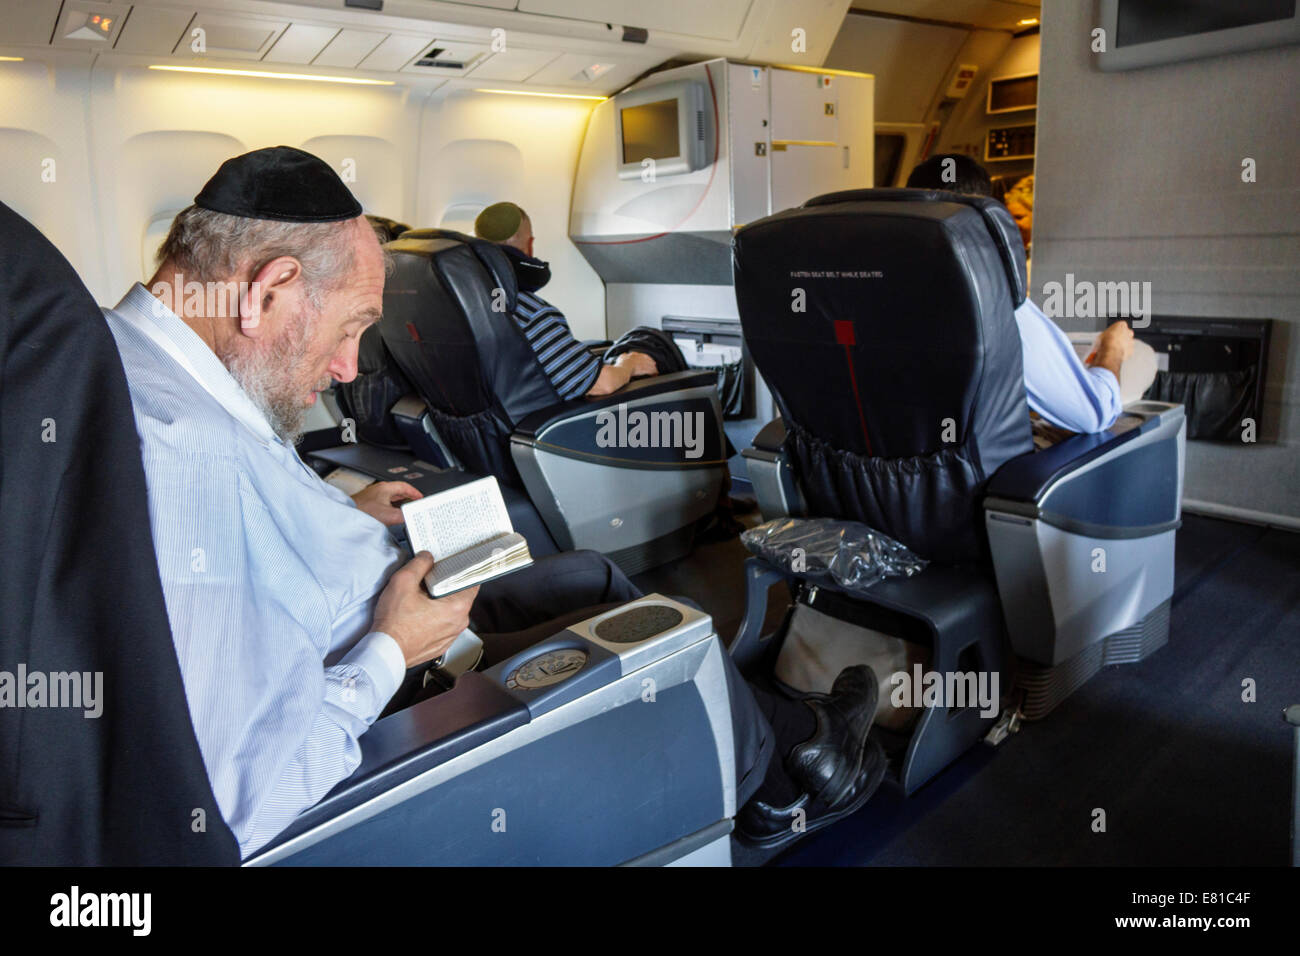 Miami Florida,International Airport,onboard,passenger cabin,American Airlines,class,seats,adult adults man men male,Jewish,wearing cap,yarmulke,kippah Stock Photo